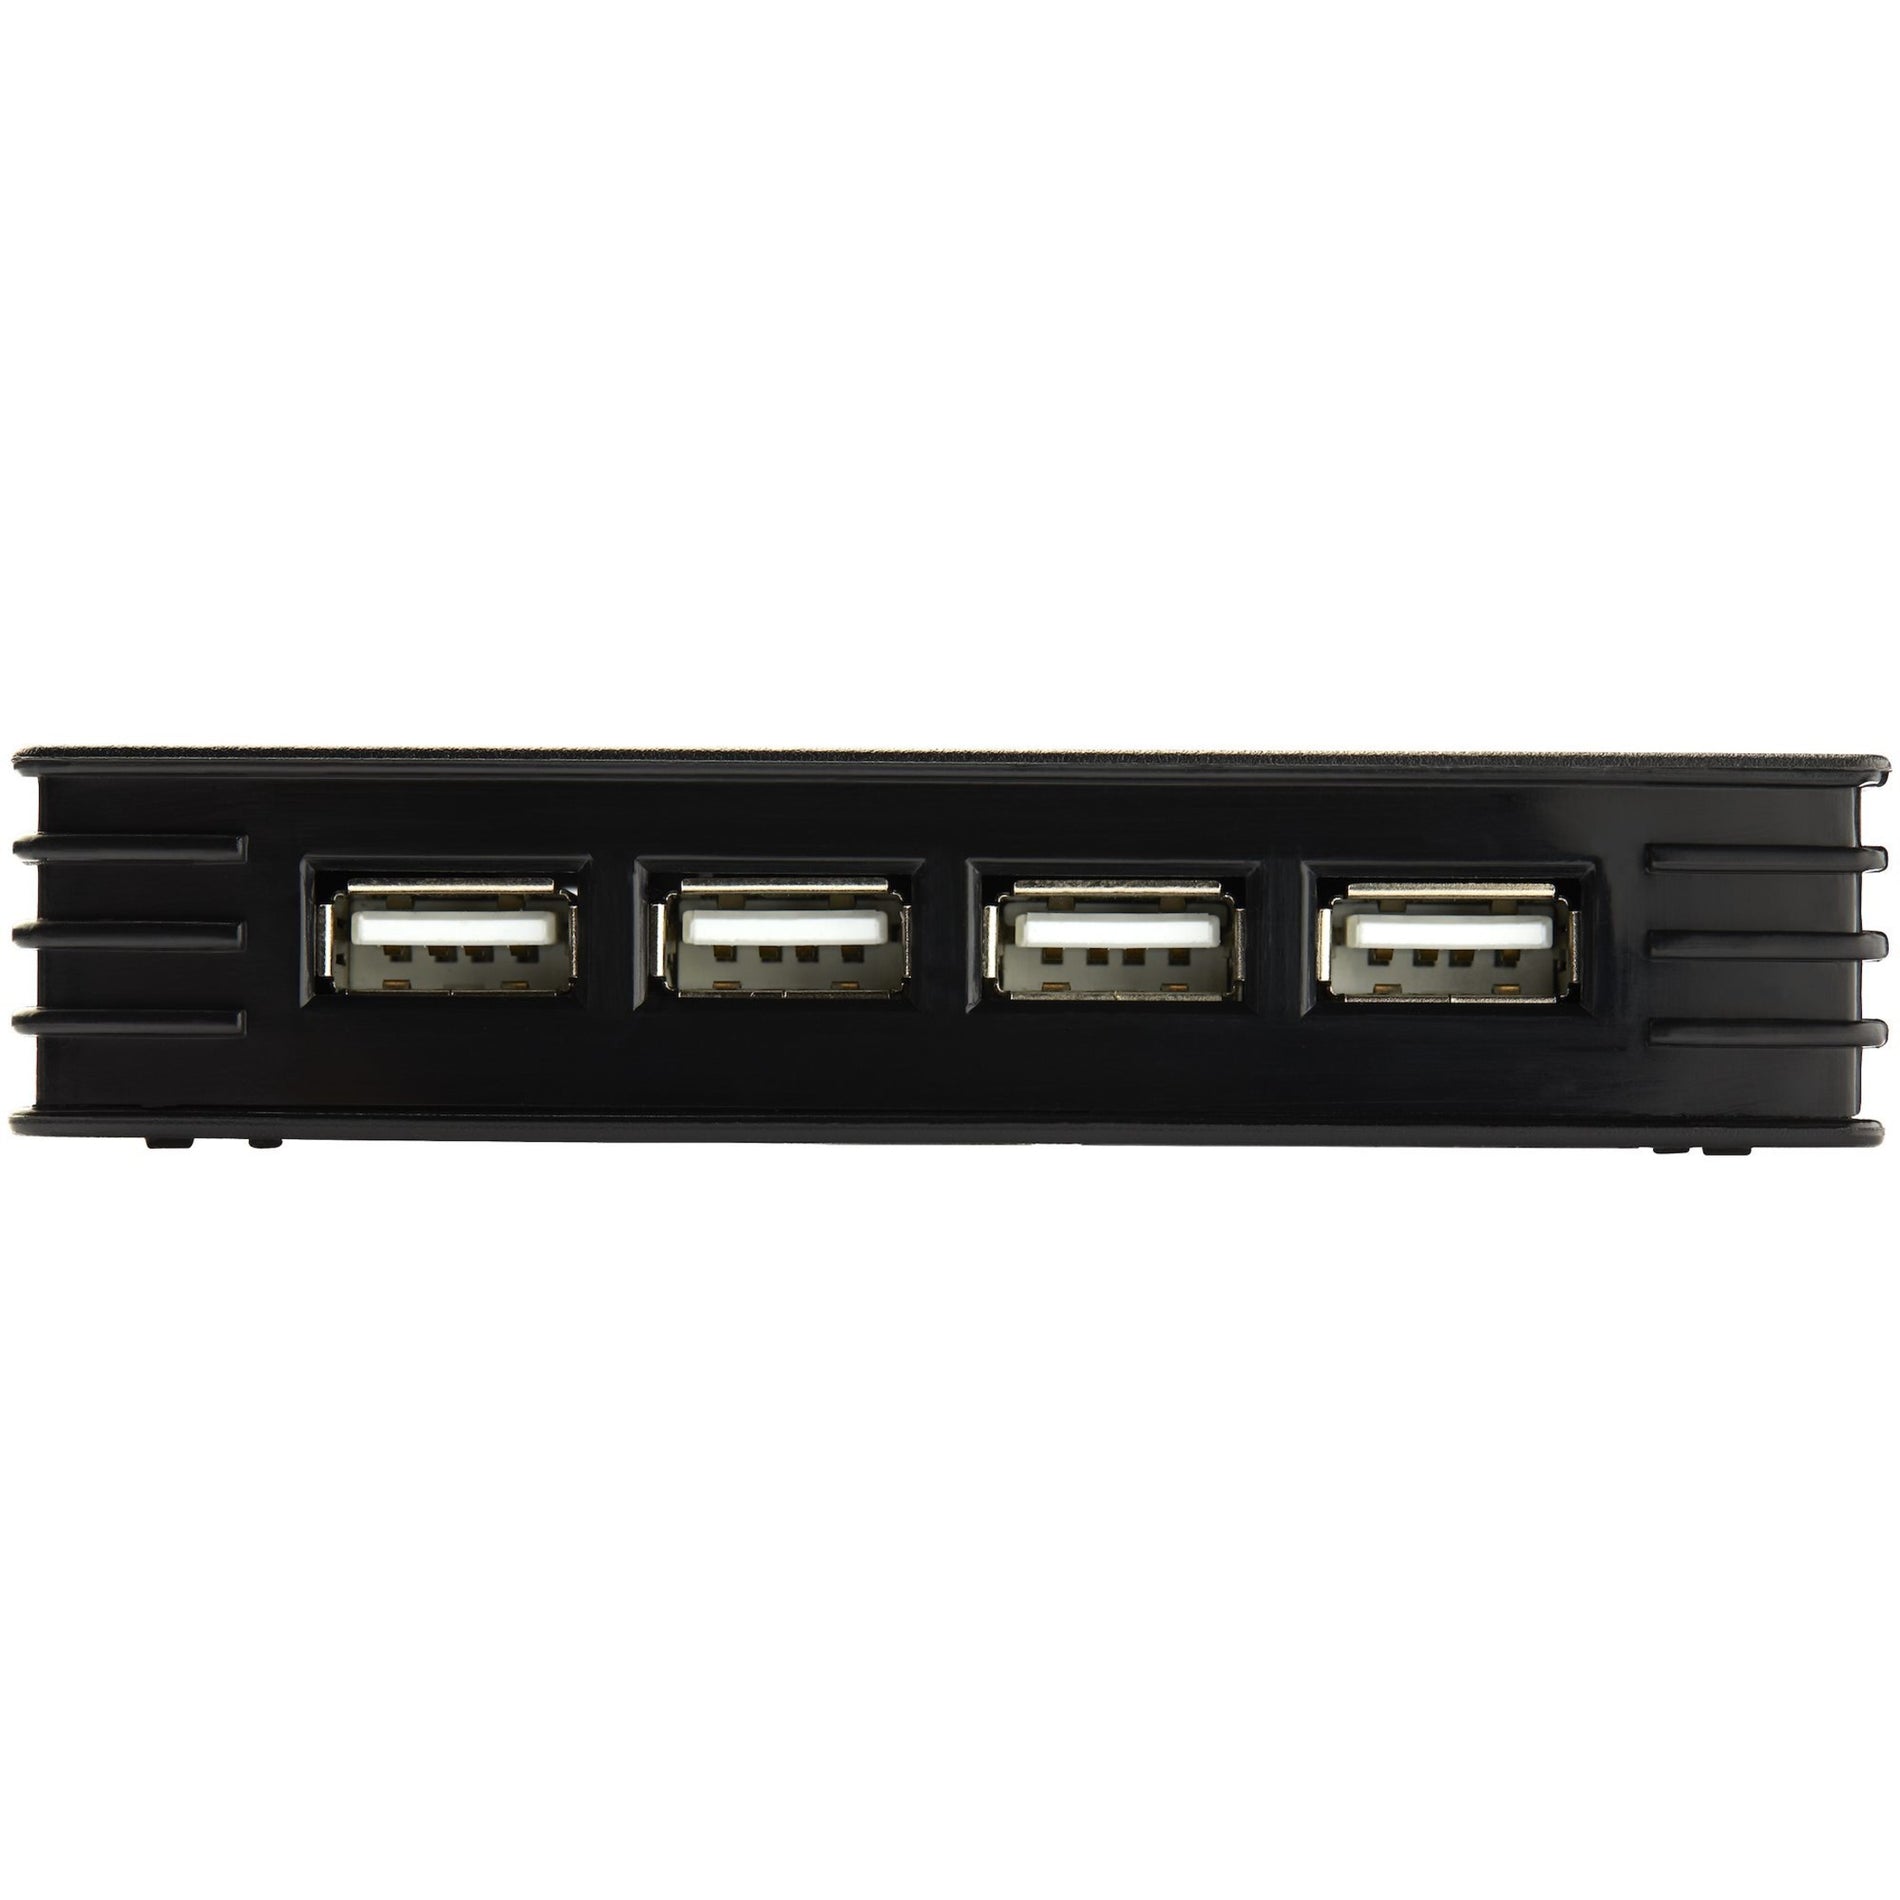 StarTech.com ST4202USB 4 Port Compact Black USB 2.0 Hub, Add 4 Additional USB Ports with High Data Bandwidth